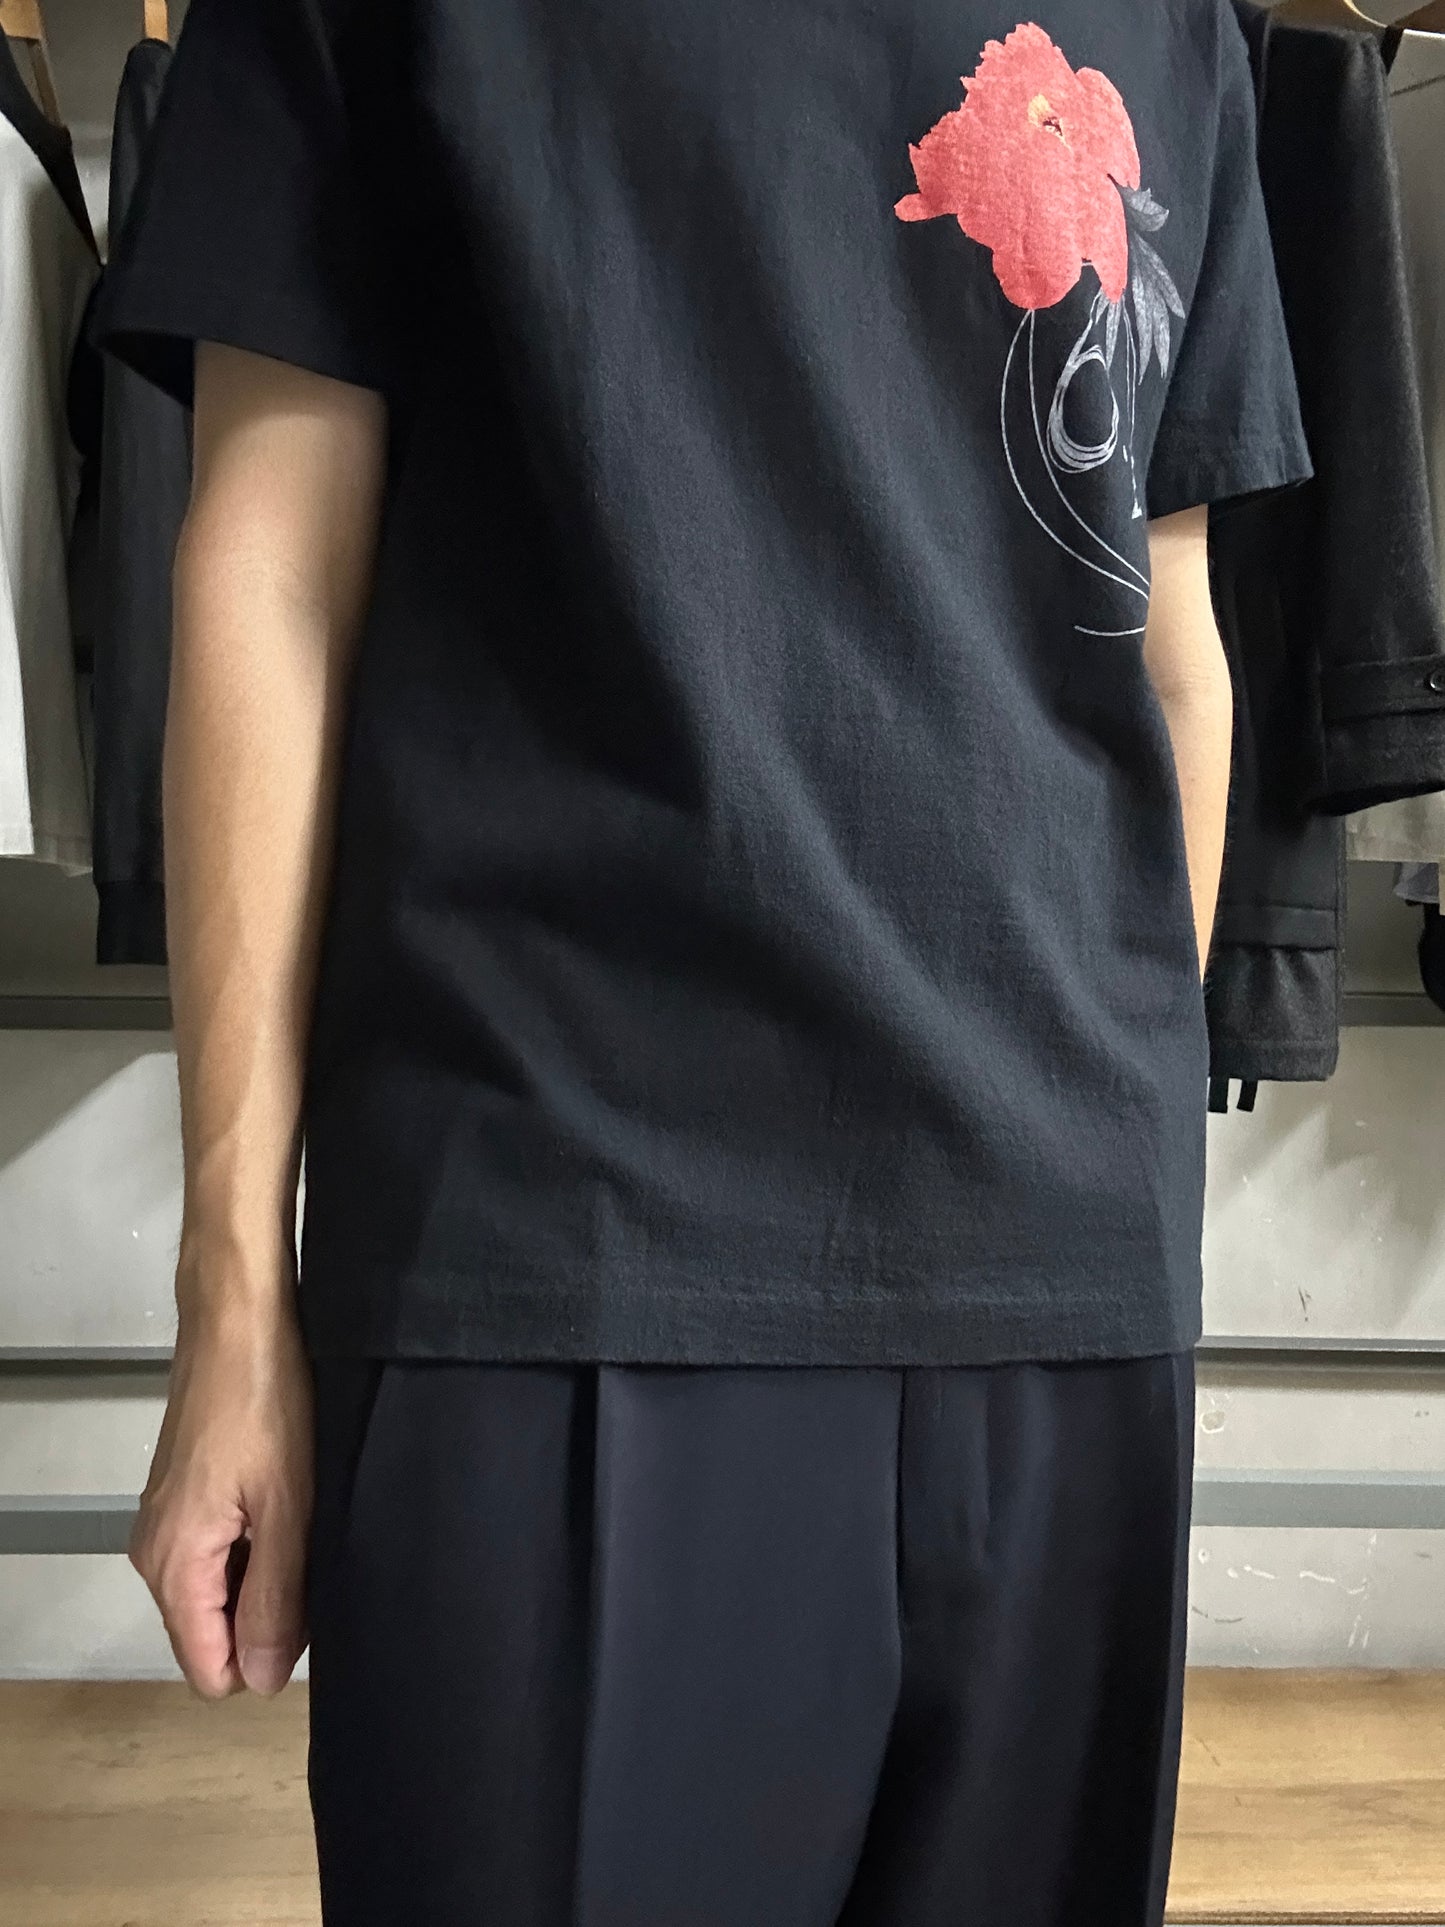 S'YTE  X NAKAMU Flower Print T-Shirt-Size 3